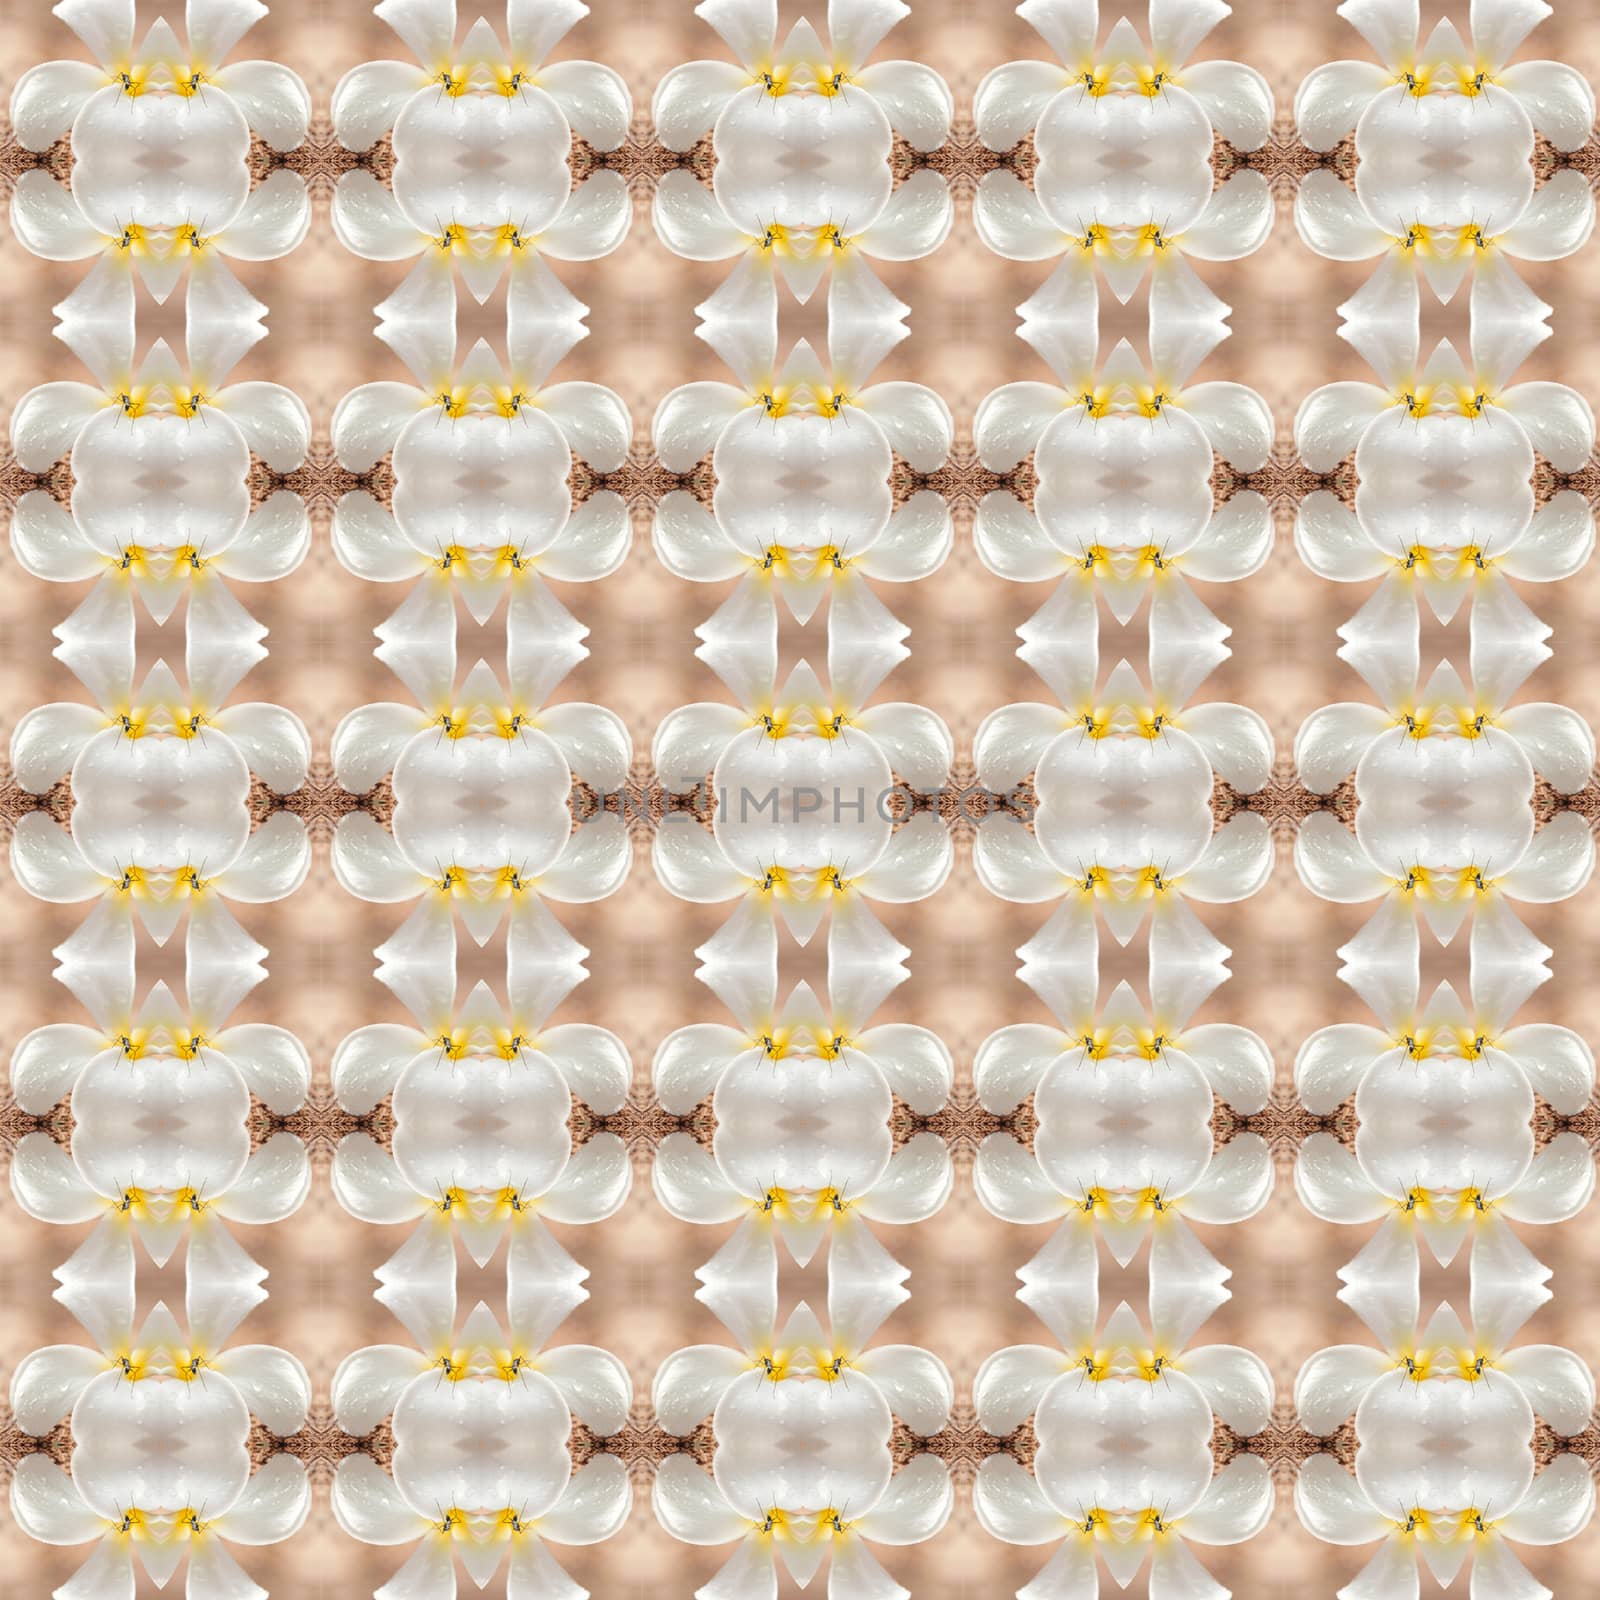 Seamless pattern for design by jimbophoto